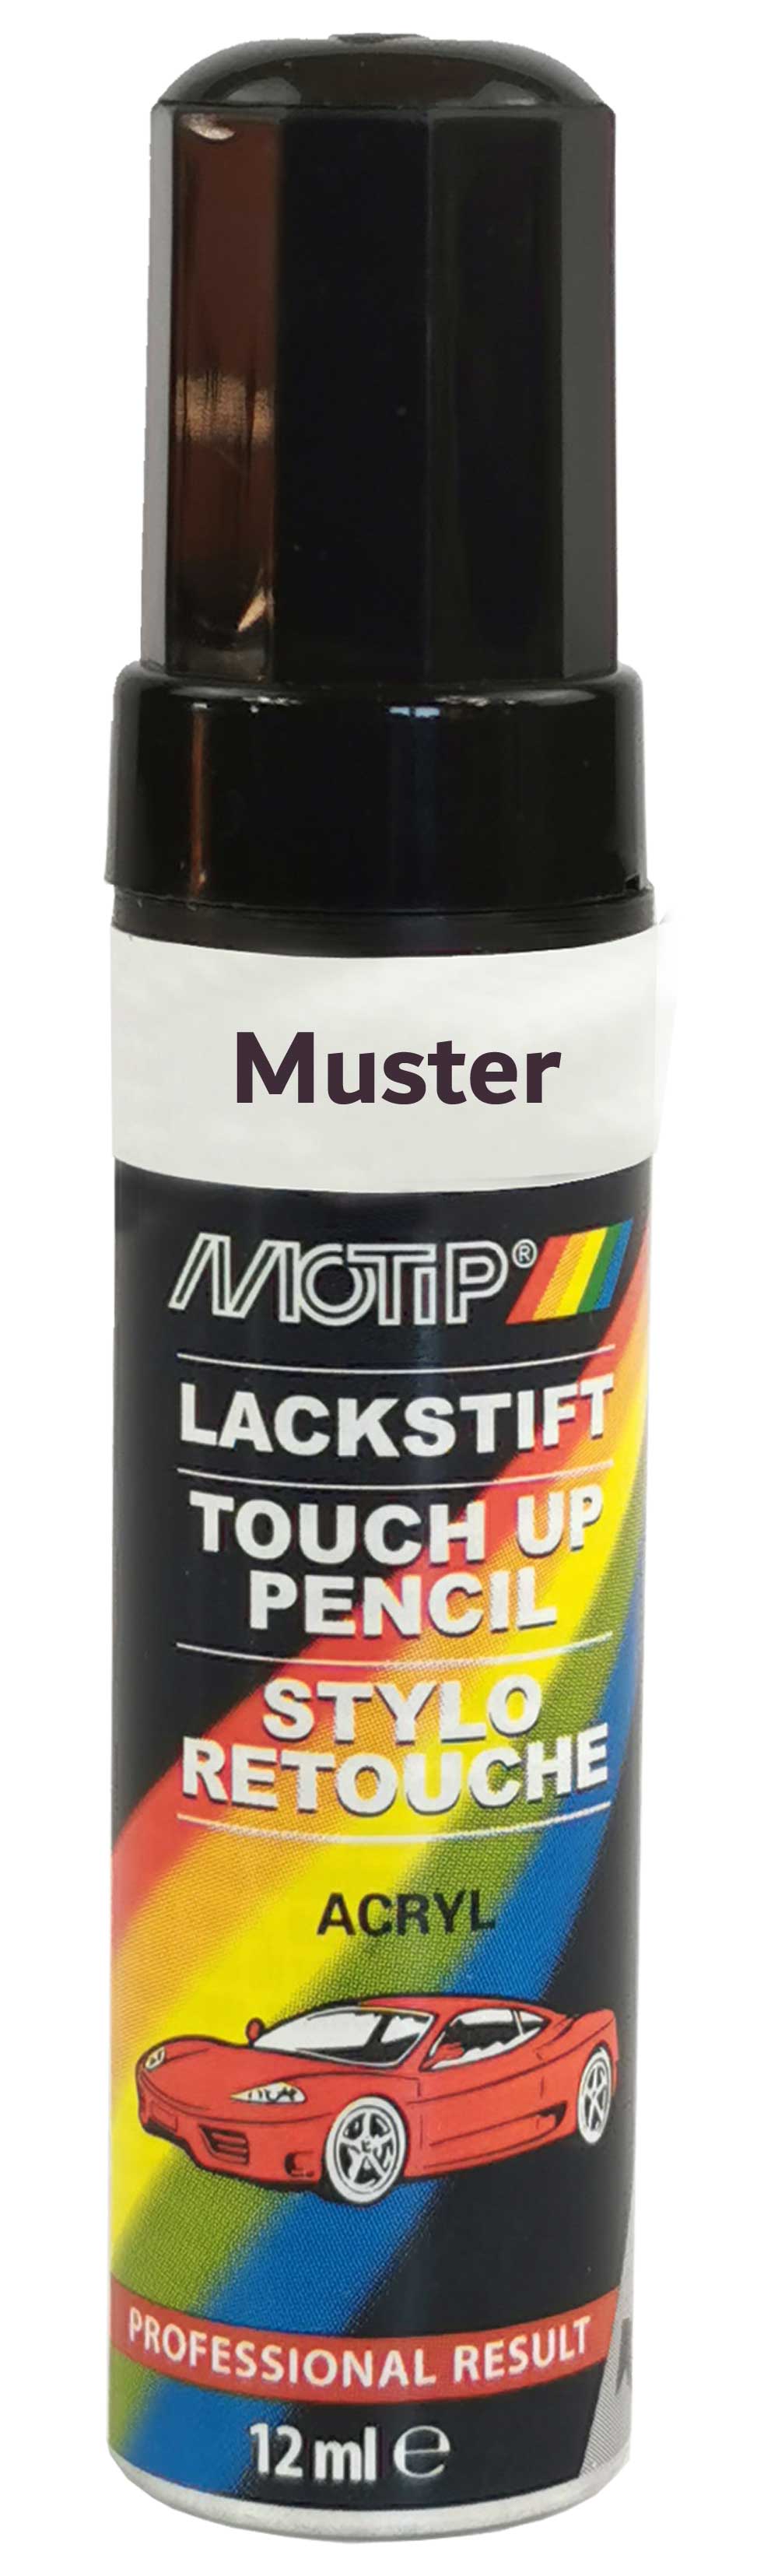 Motip Lack-Stift grau 12ml 951085